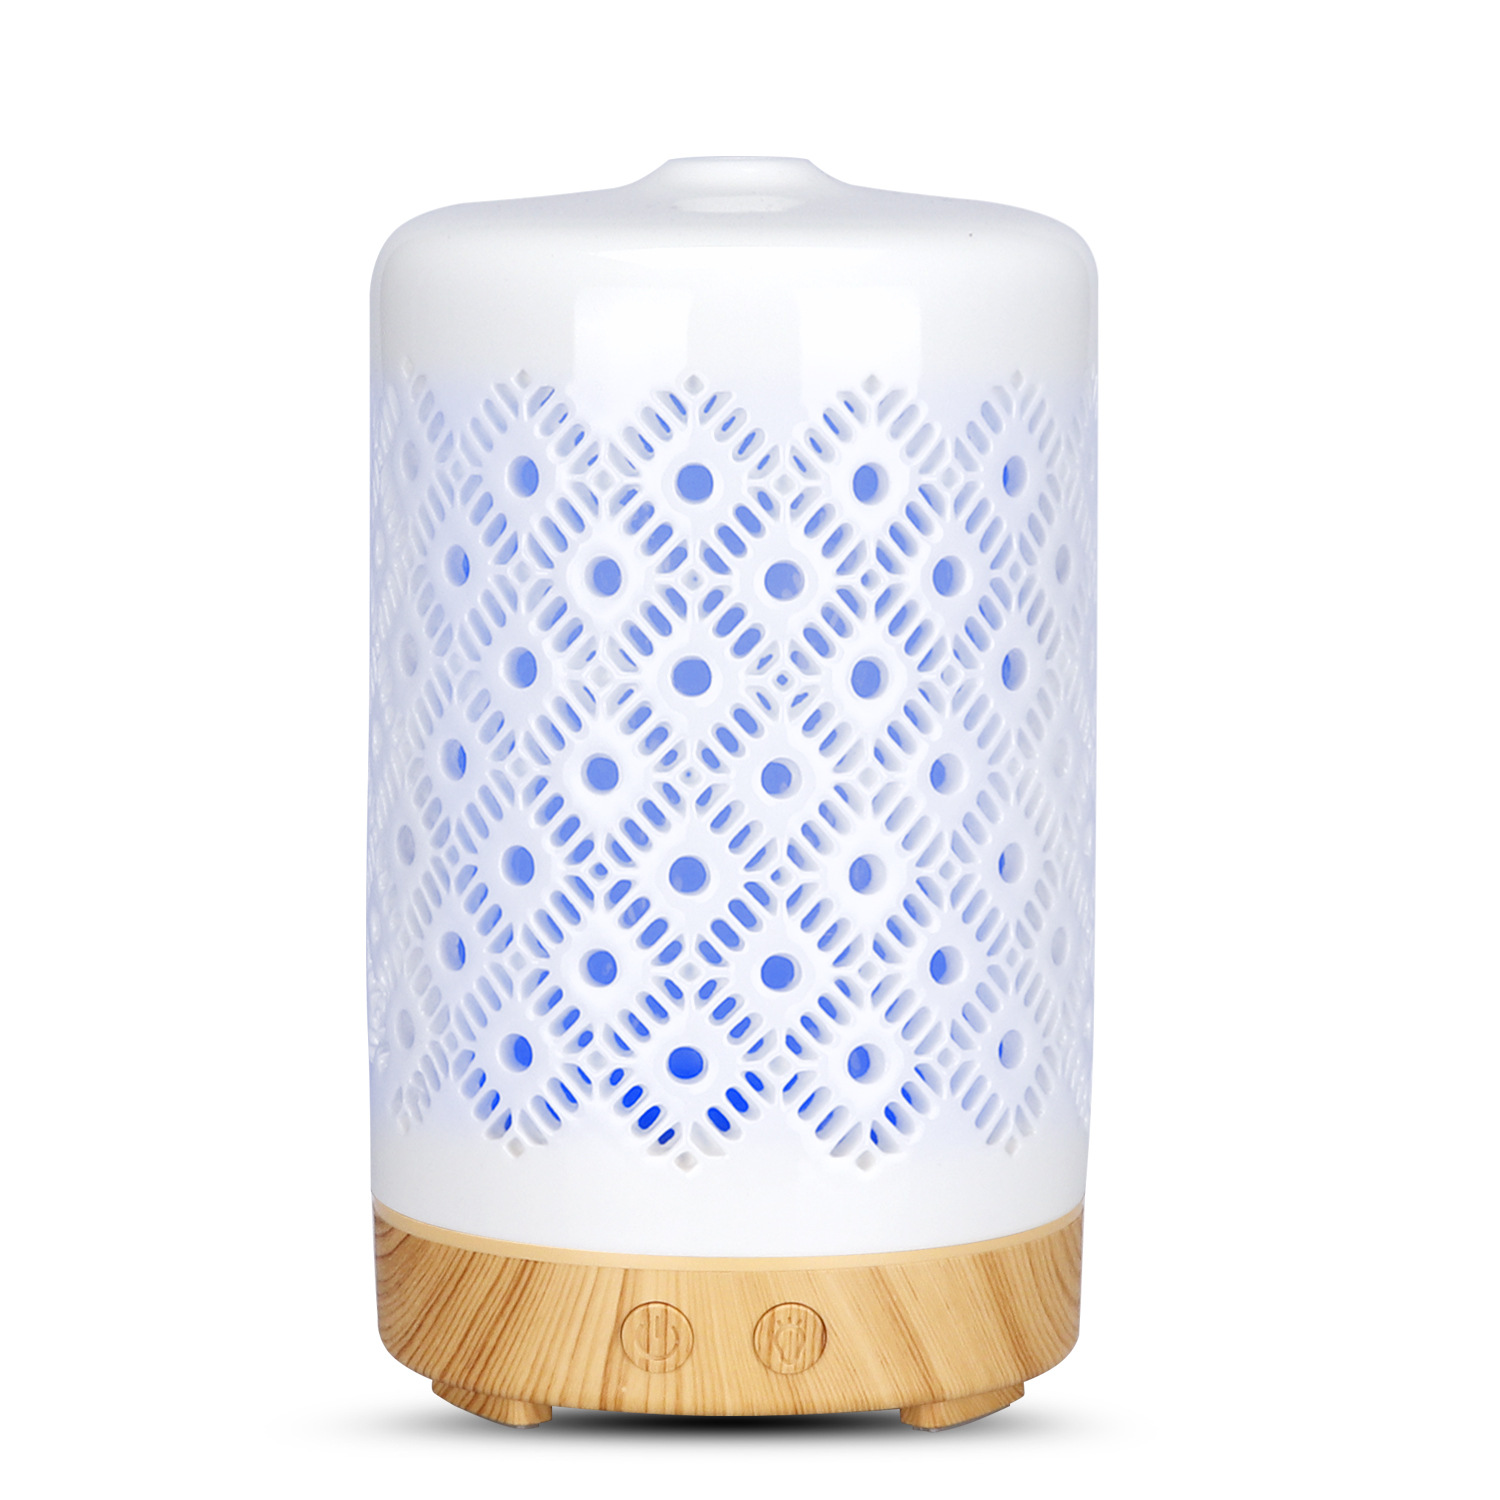 White Ceramic Ultrasonic Air Humidifier 100ml Aroma Essential Oil Diffuser